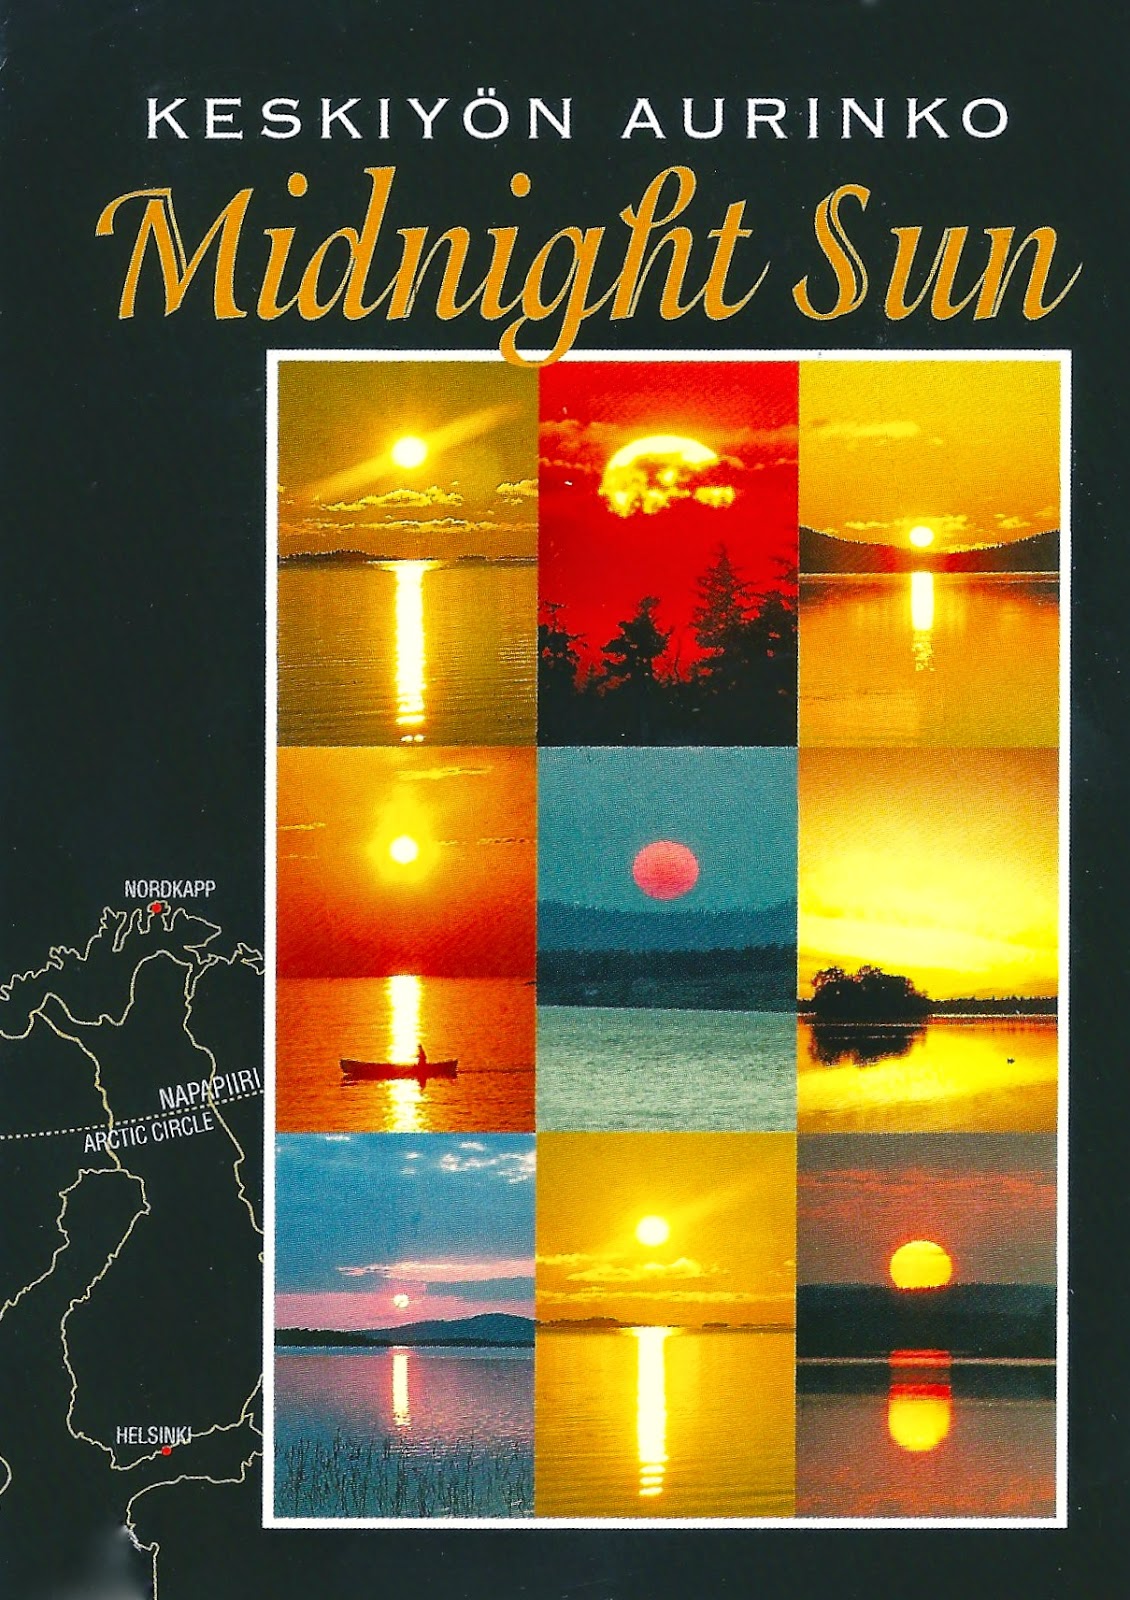 My Favorite Views: Finland - Keskiyon Aurinko, Midnight Sun